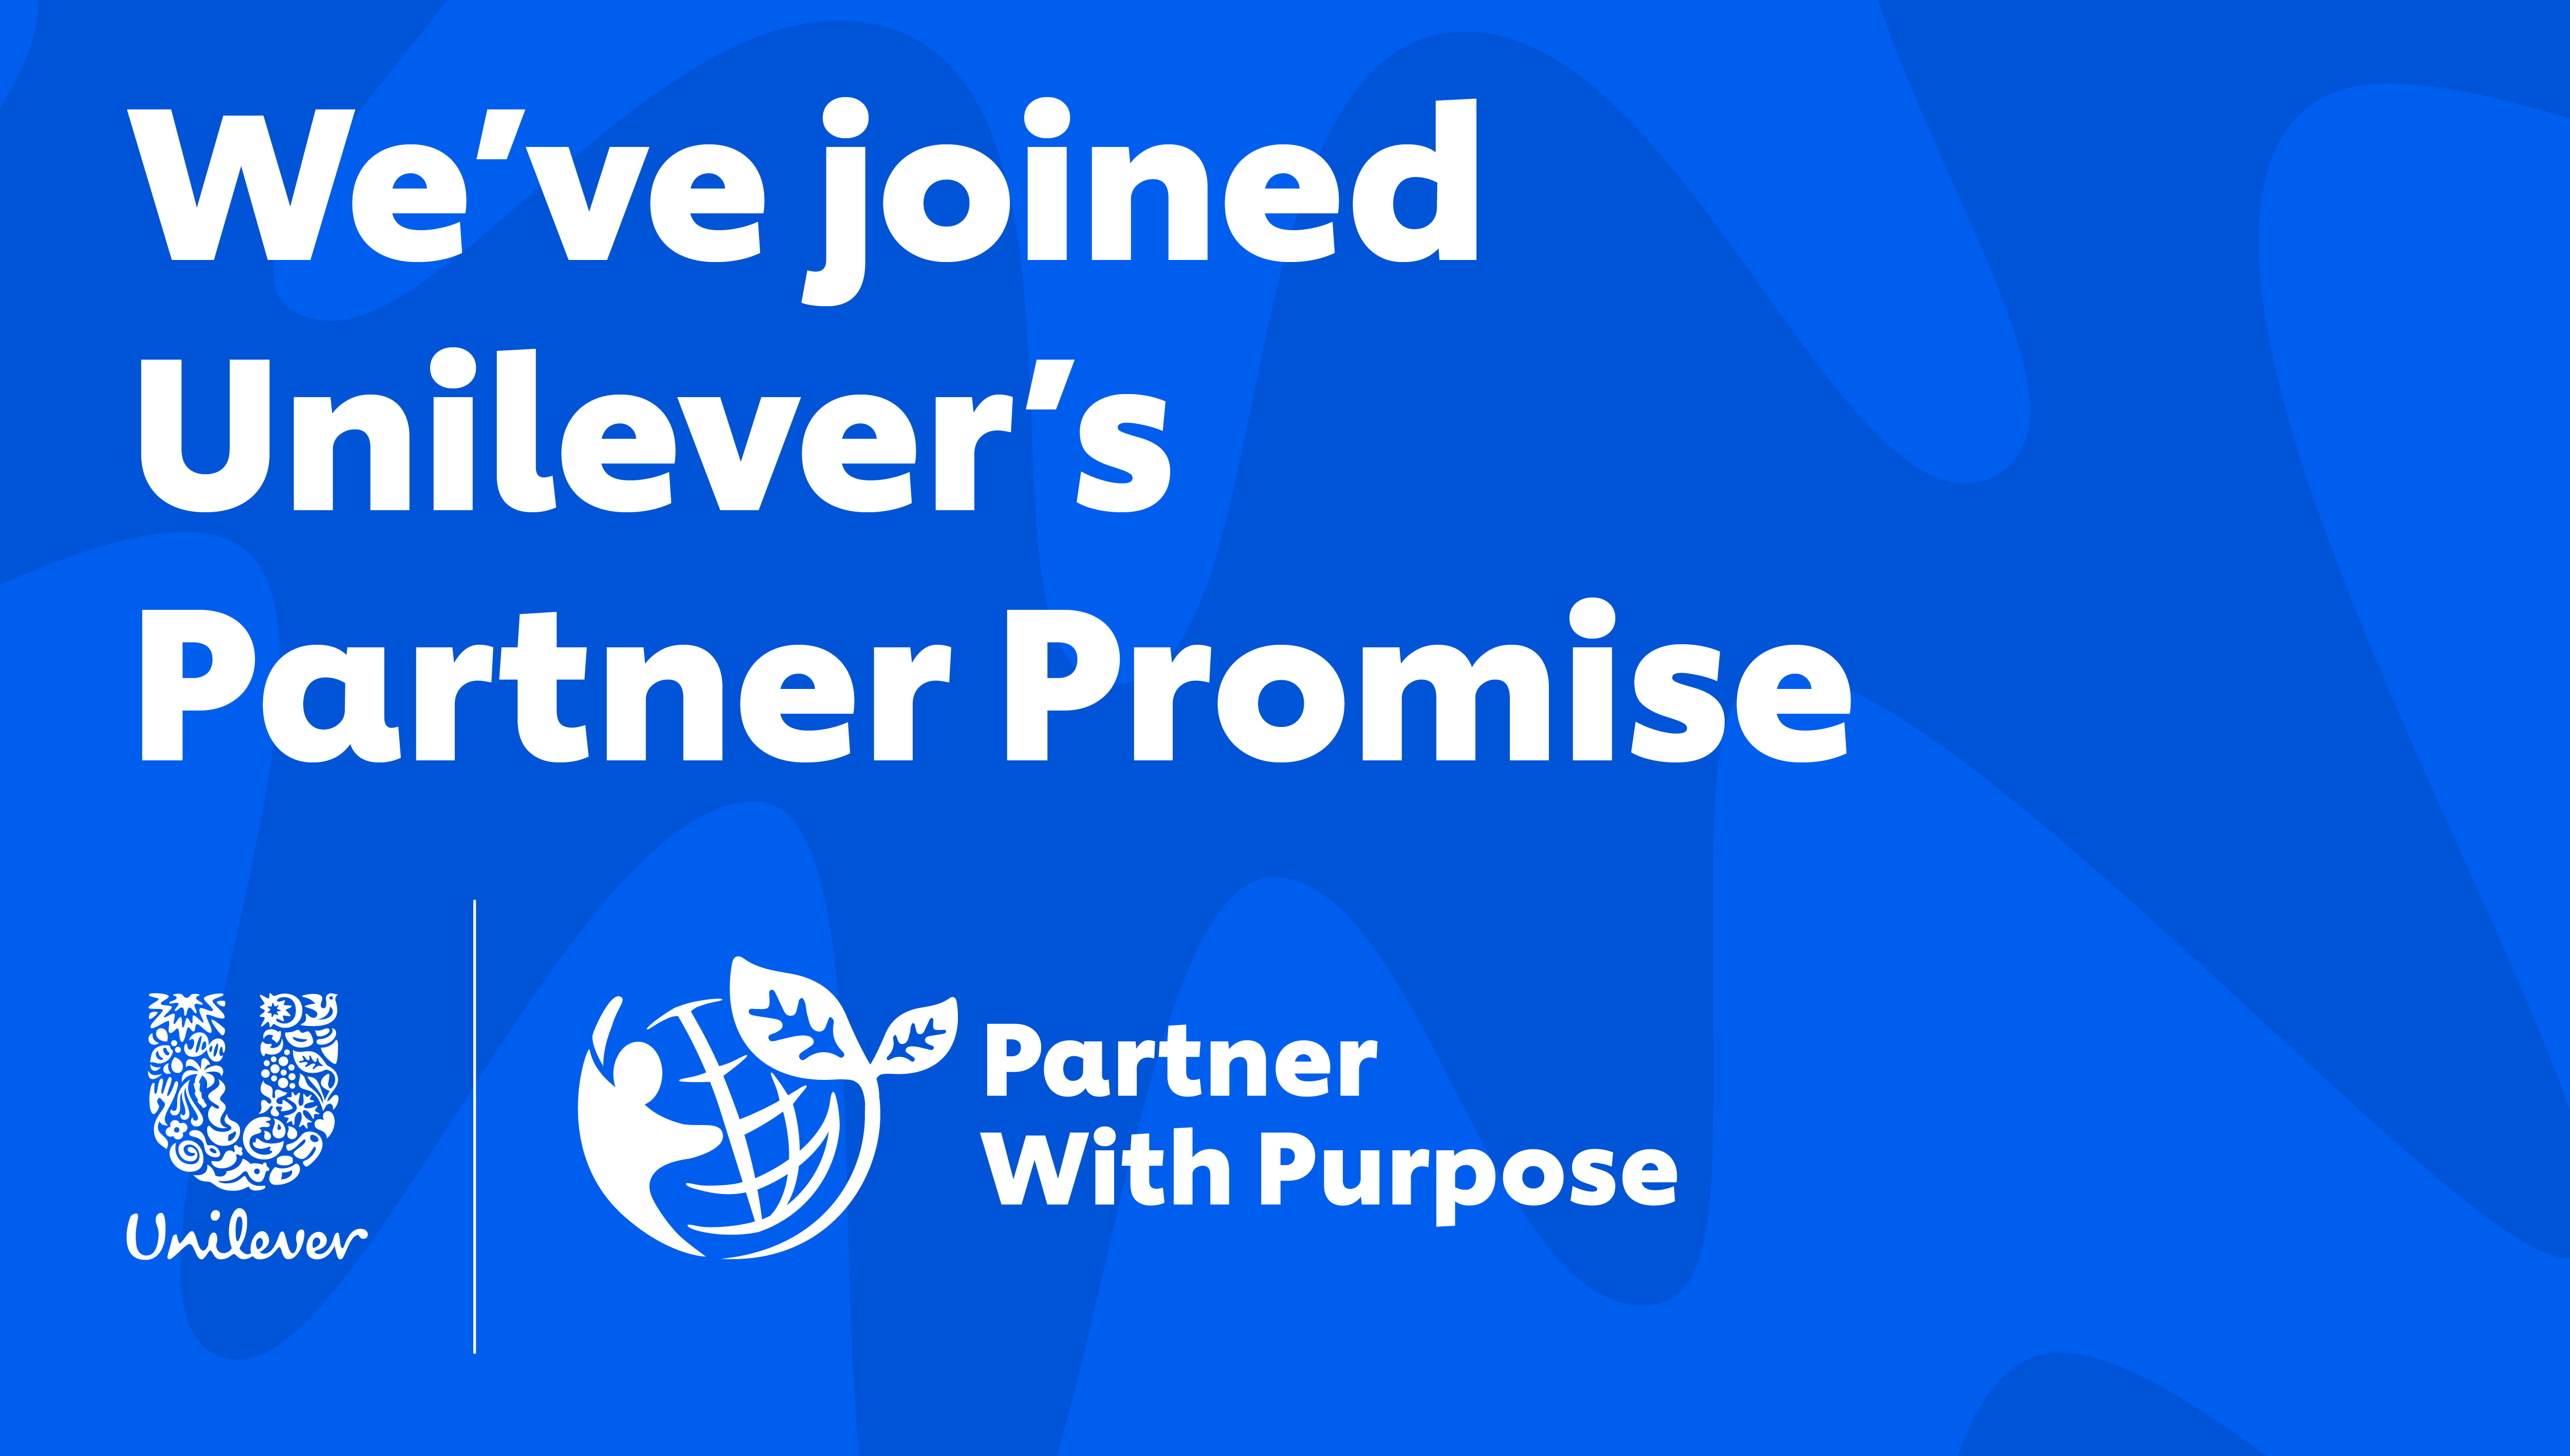 Unilever Partner with Purpose